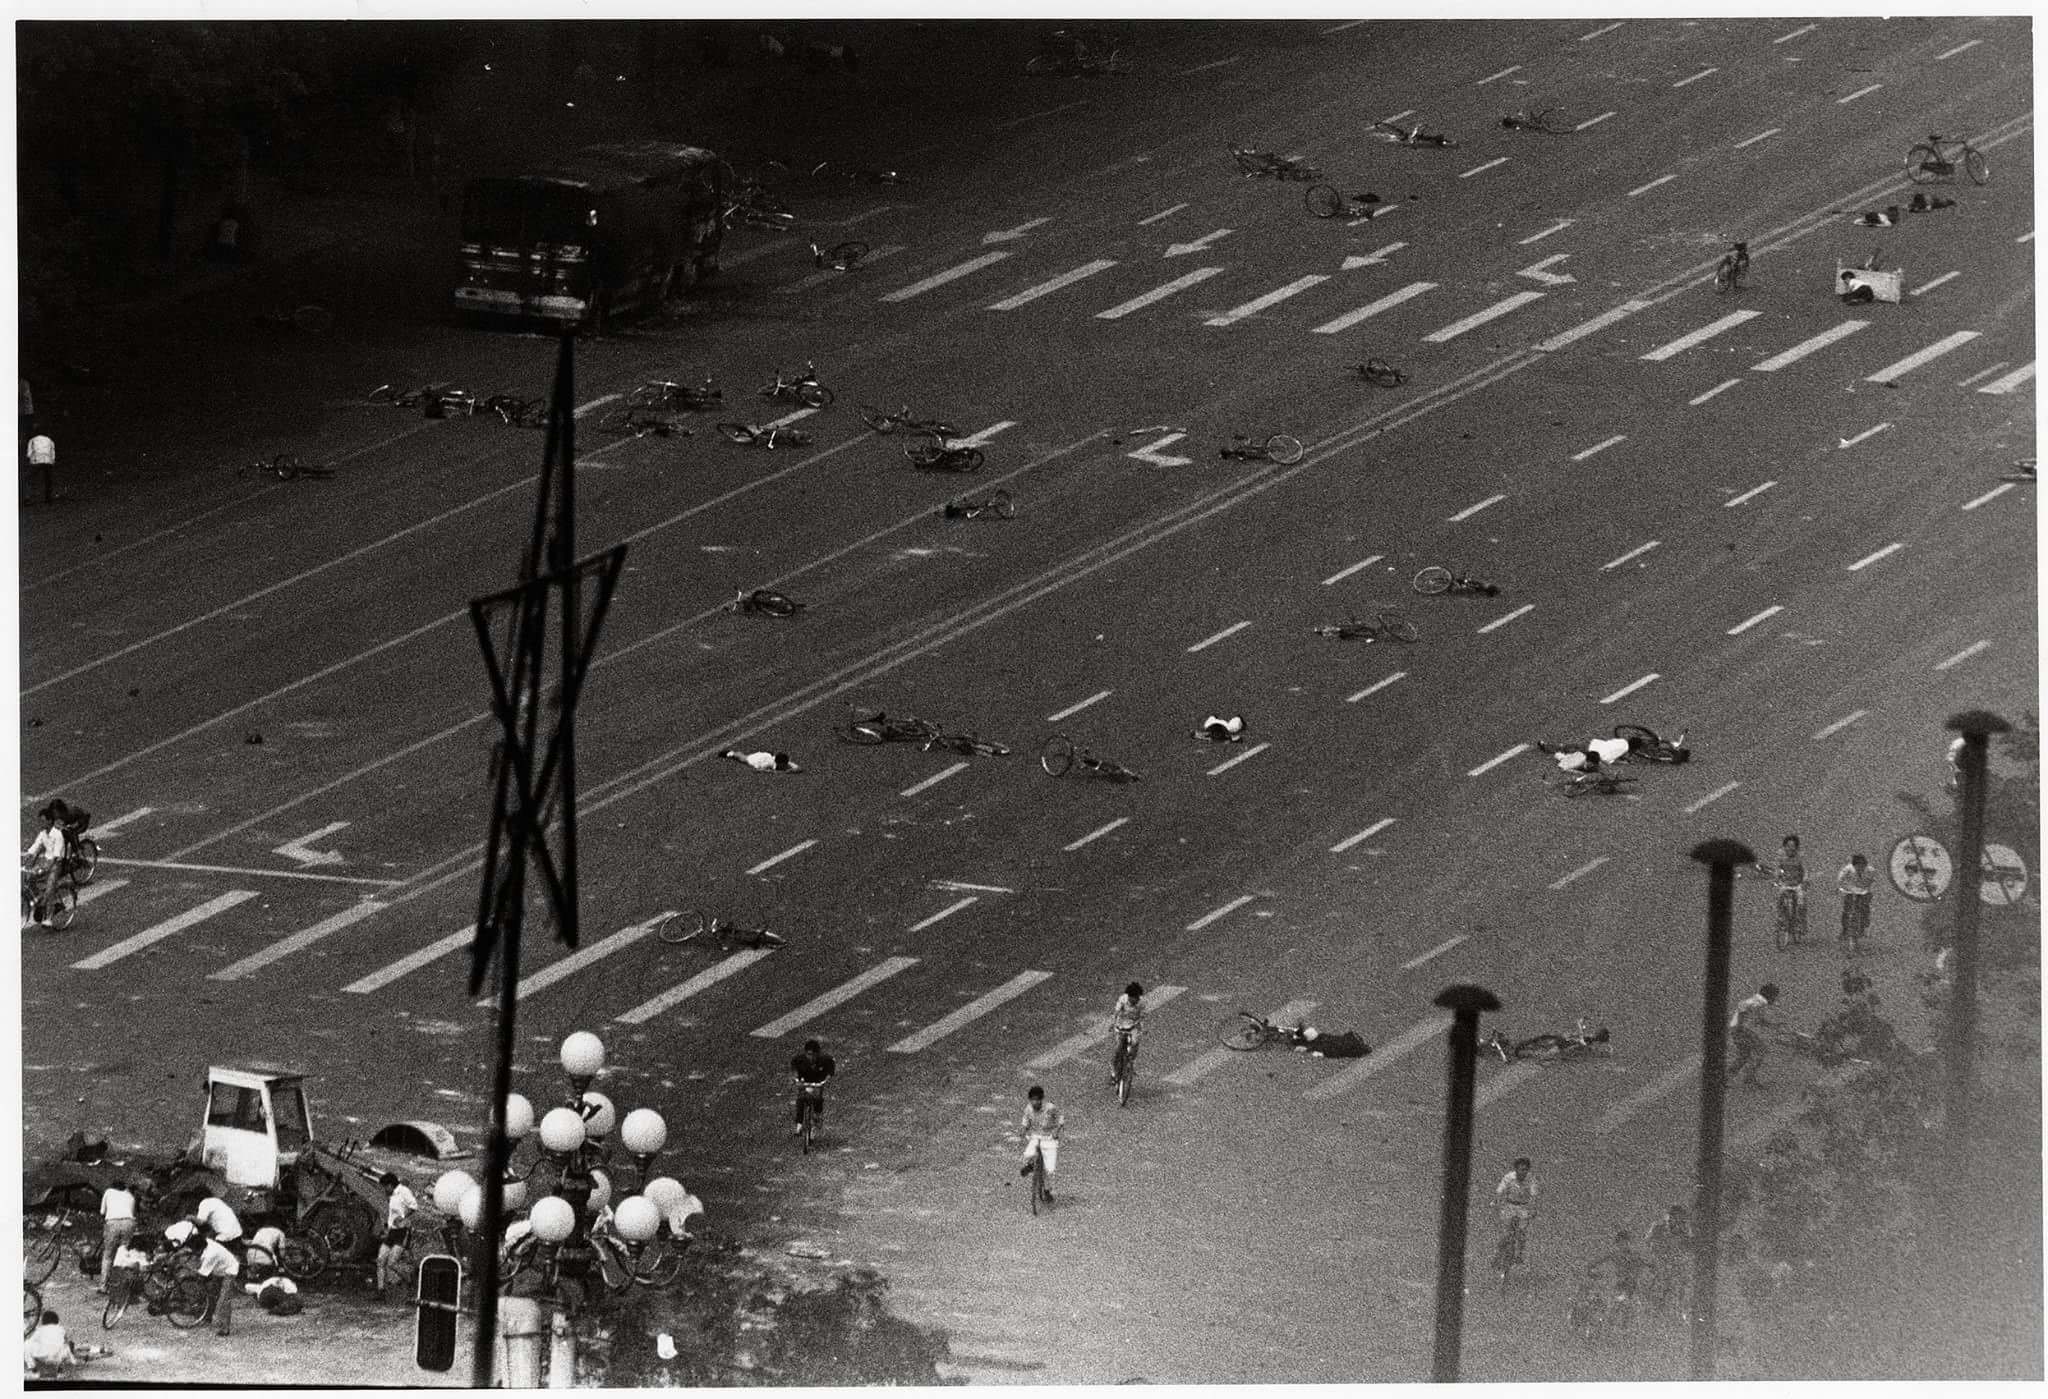 tiananmen-china-plaza-30-anos-masacre-fotografia-01.jpg